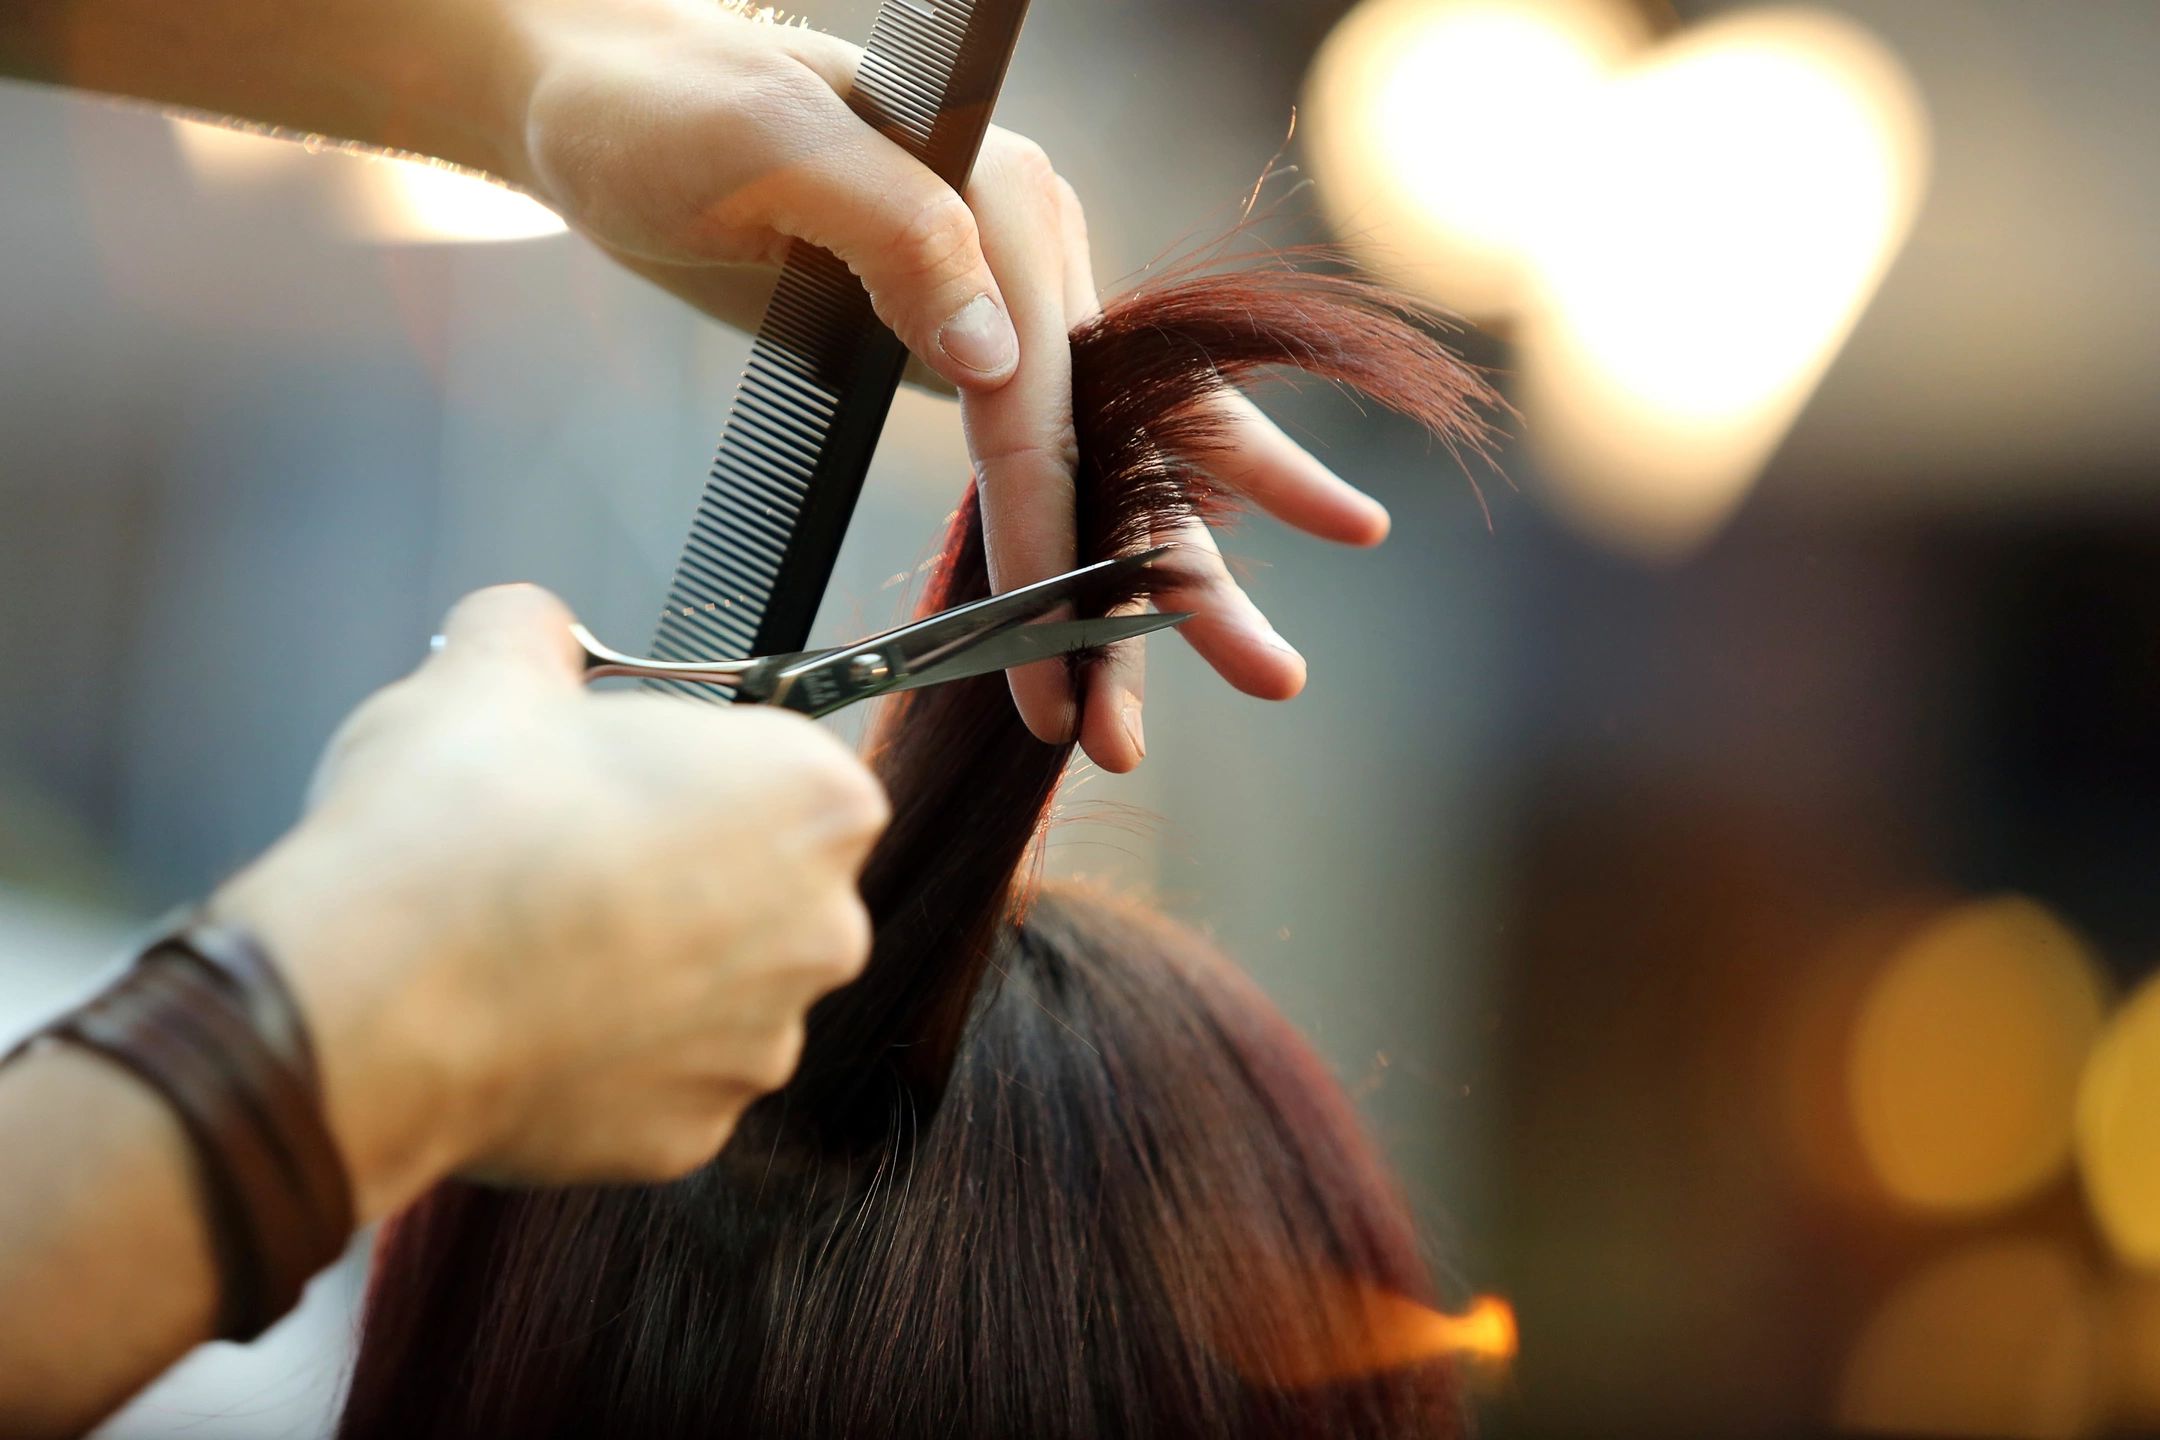 Barber preparing to cut woman's hair